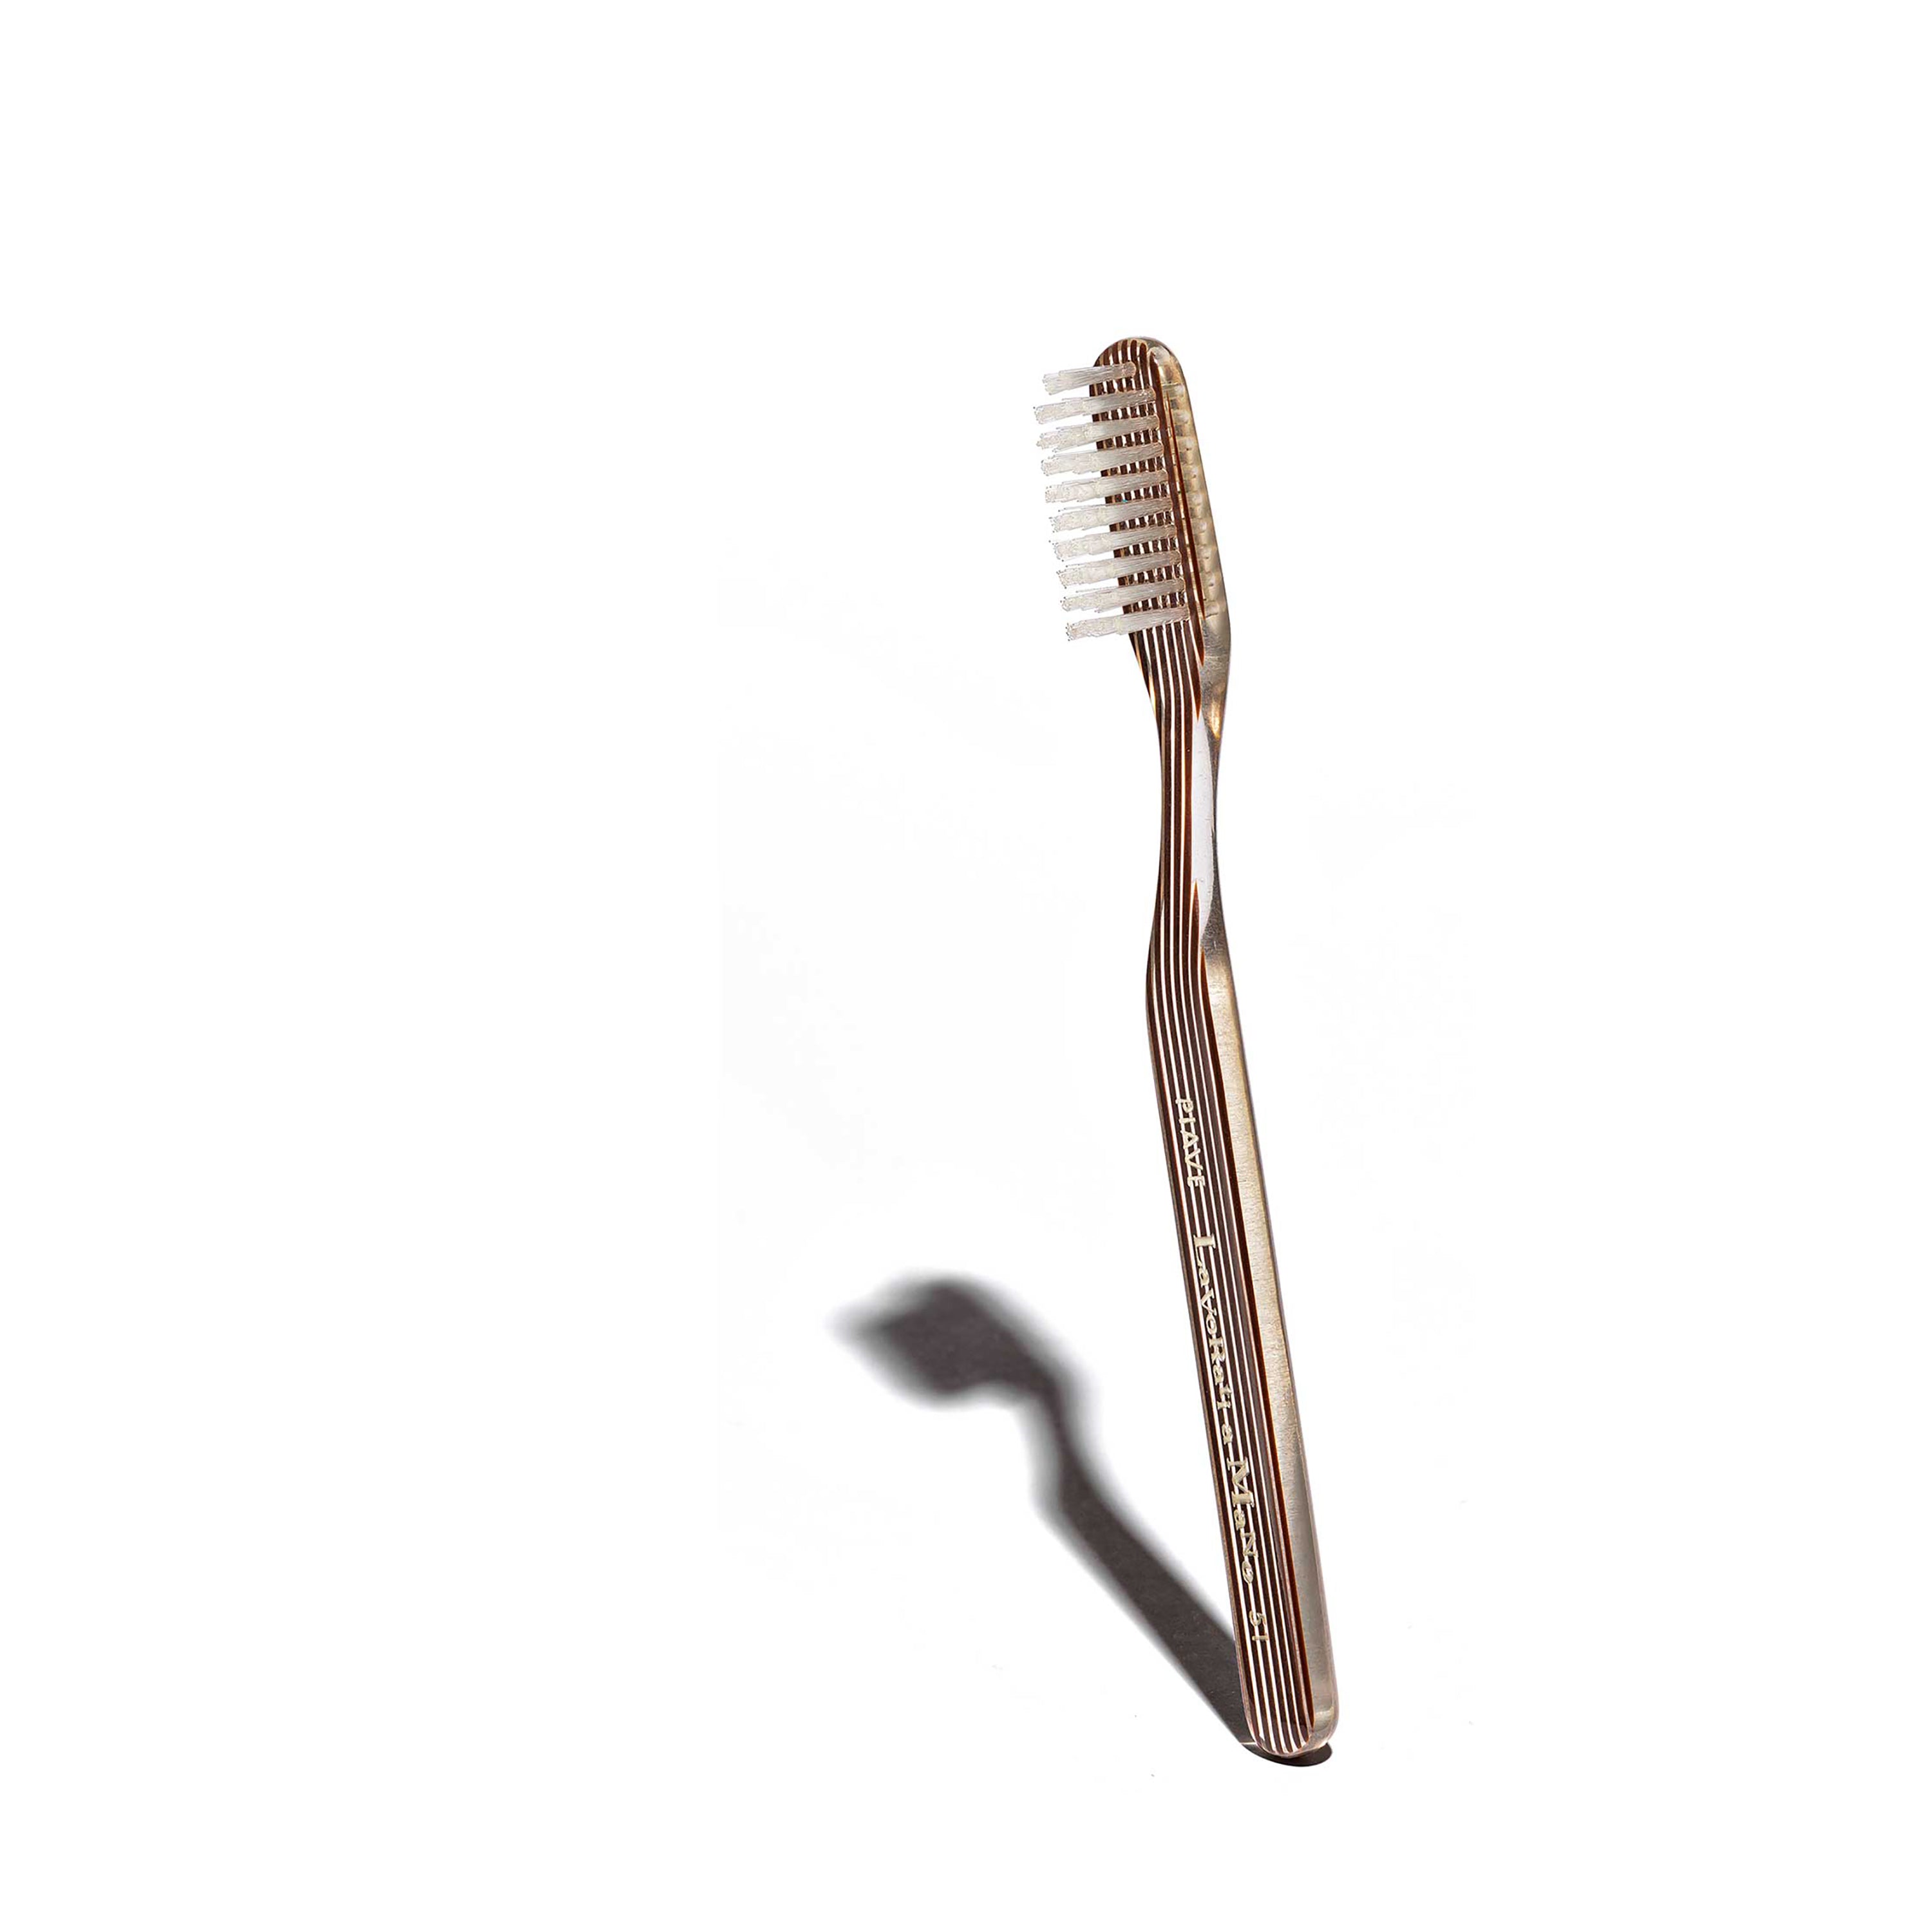 Napoli toothbrush